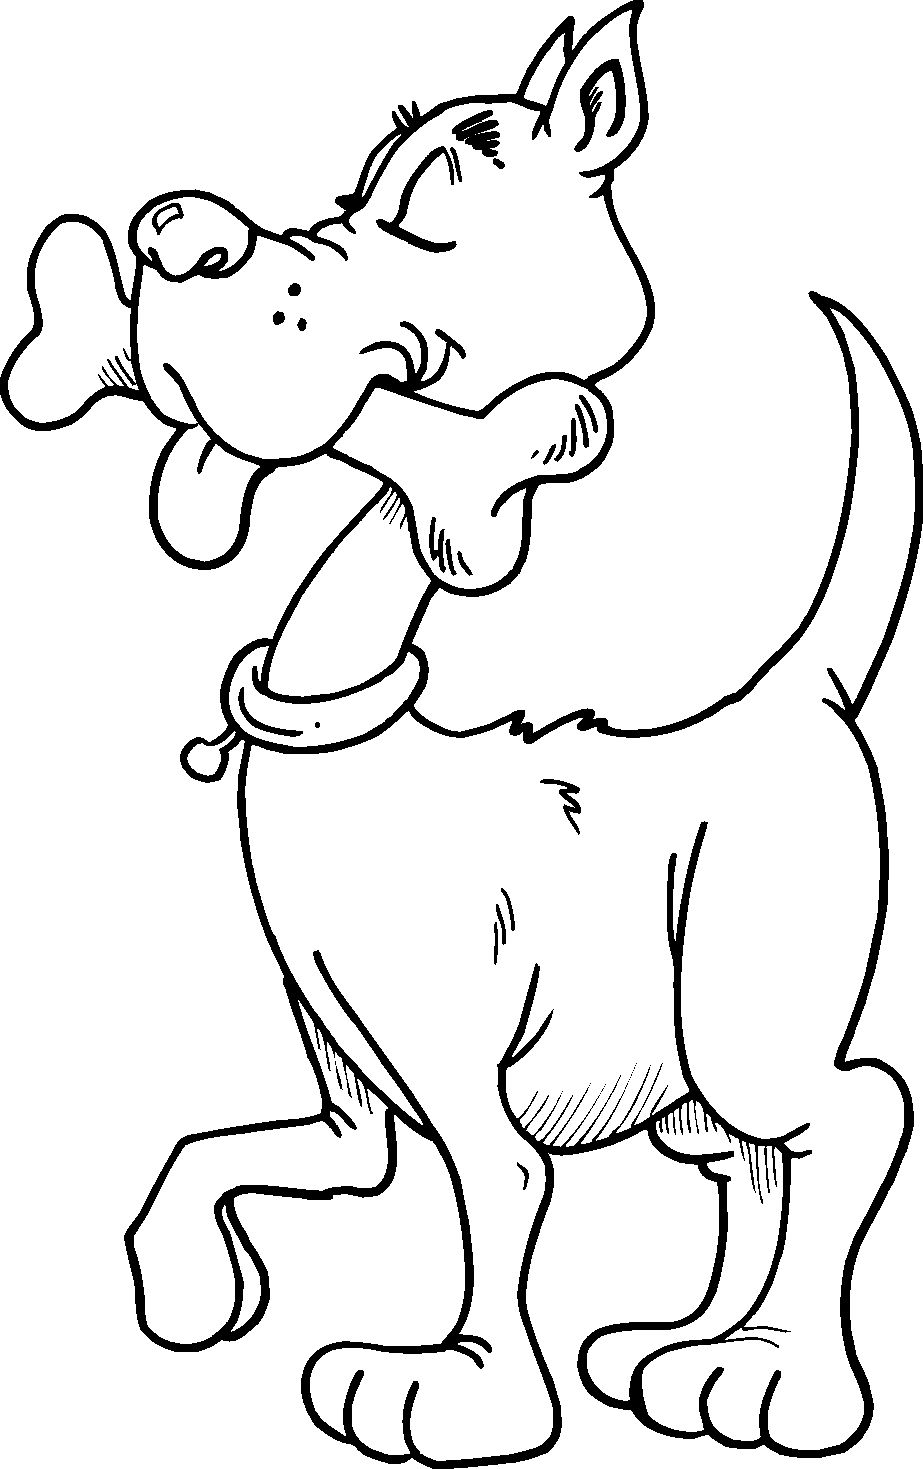 Cartoon Pictures Of Animals For Kids - purequo.com